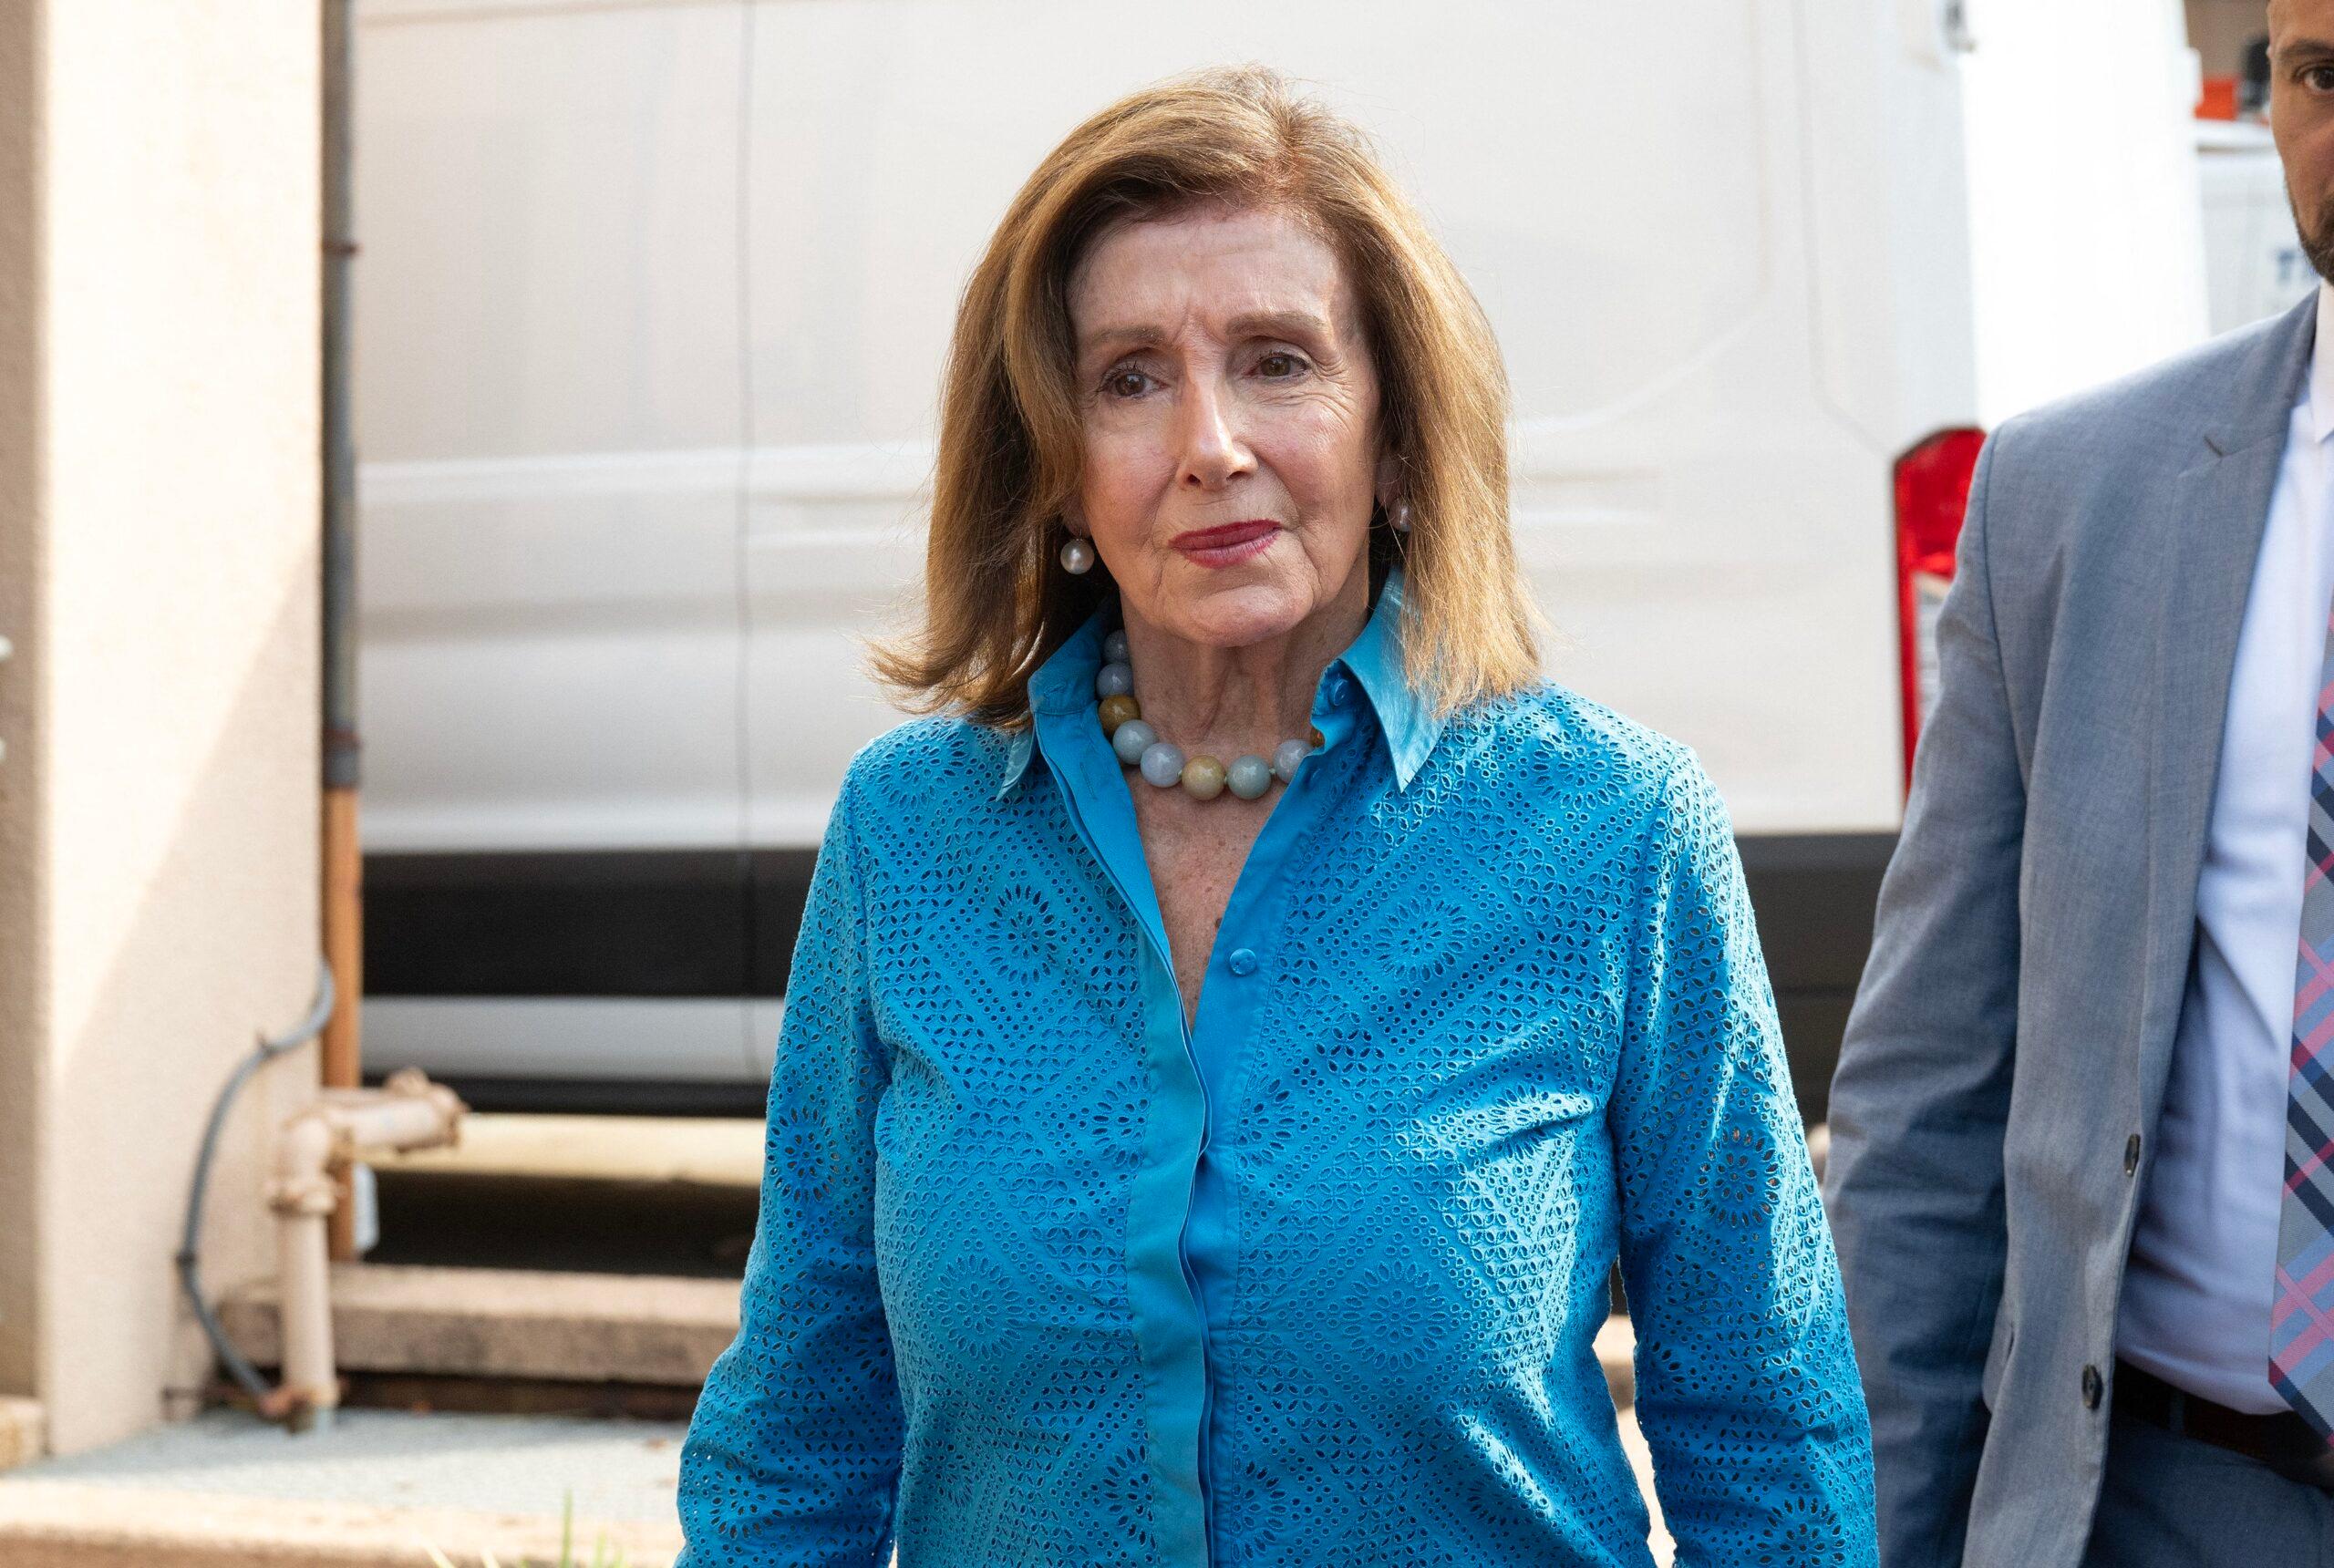 US House Democrat Nancy Pelosi wearing a blue shirt